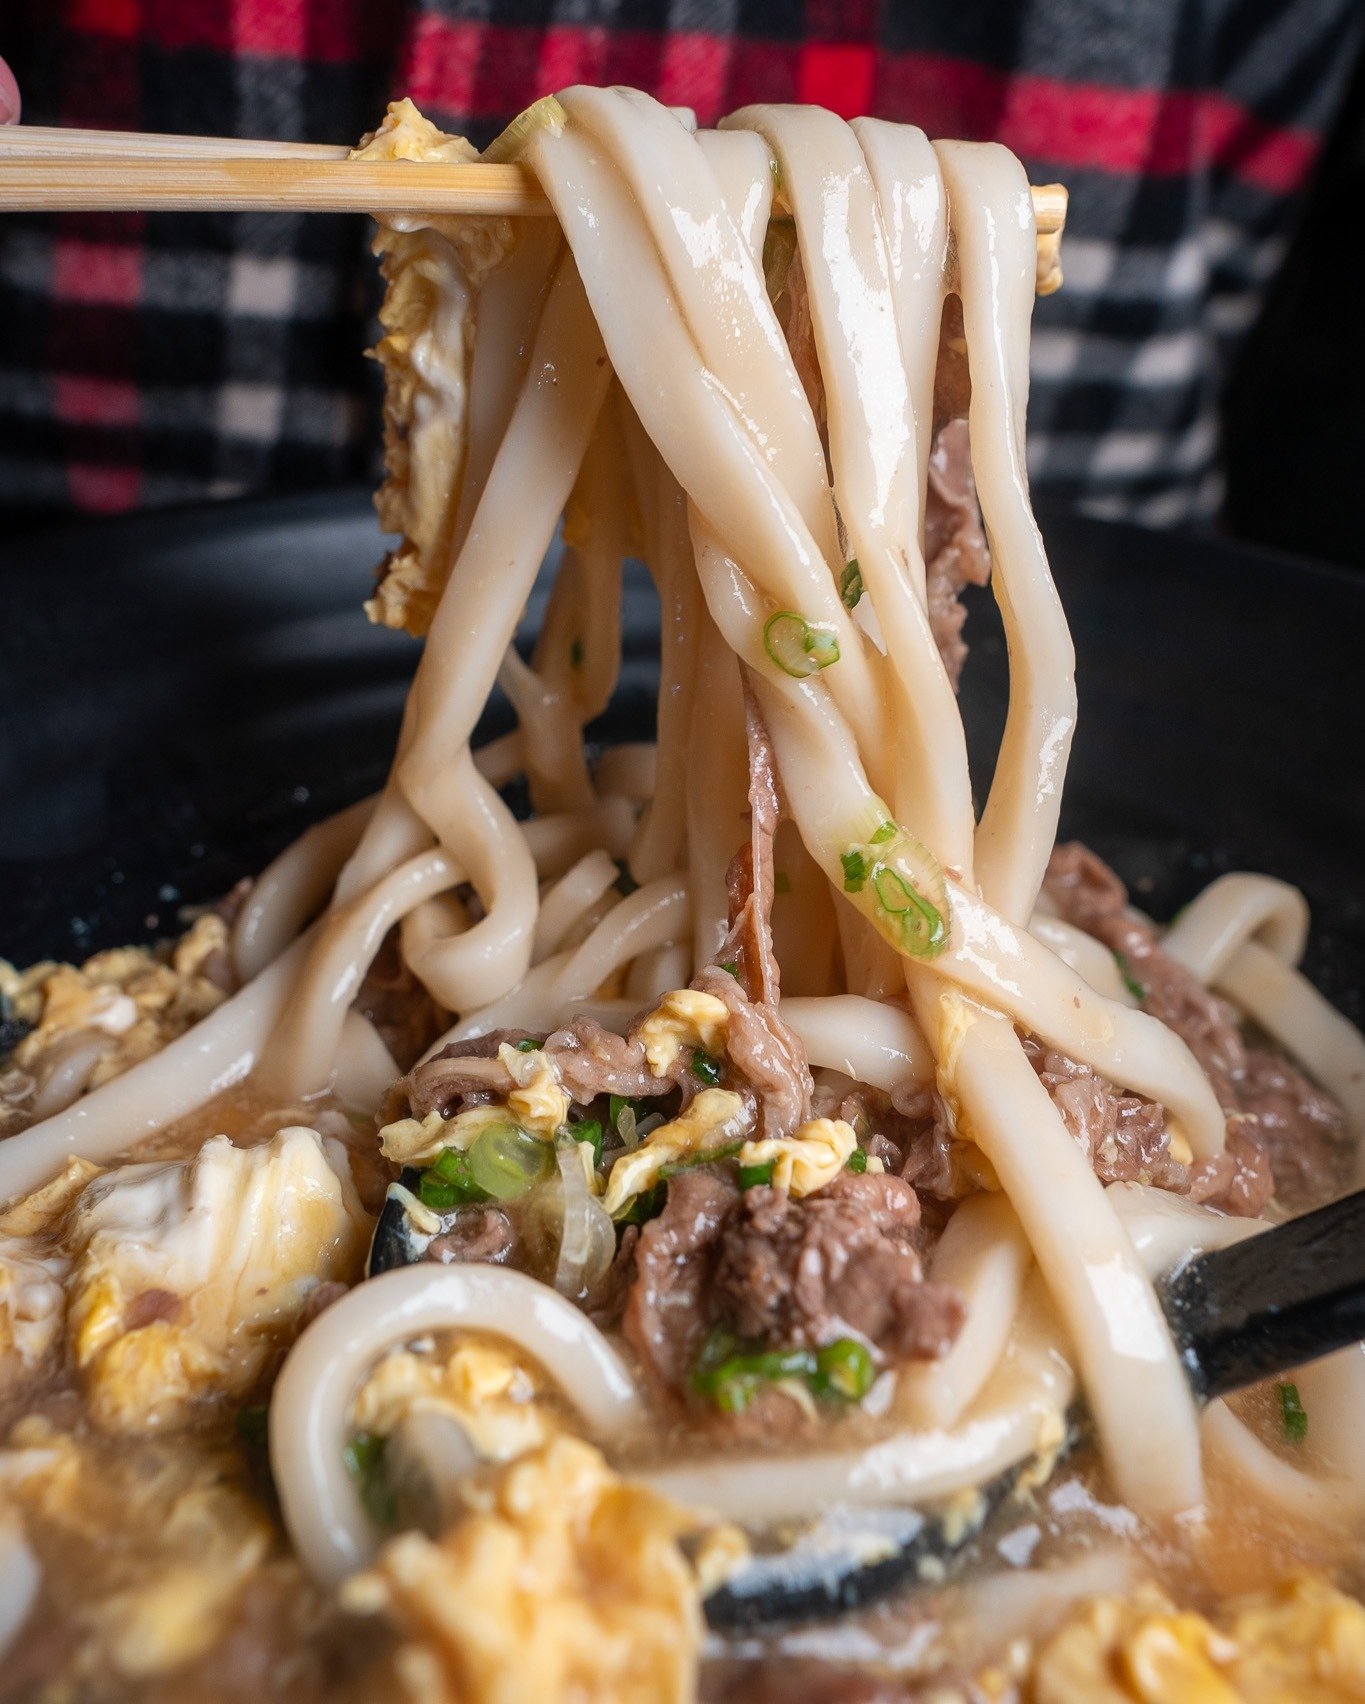 When life gives you udon, slurp it up with joy! #LAFoodie 🙌🏻🍜 

👇 Freshly homemade noodles 
◾️◽️◾️◽️◾️◽️◾️◽️◾️◽️
🍜 ᴍᴀʀᴜɢᴀᴍᴇ ᴍᴏɴᴢᴏ ʟᴀ
⏰ ᴍᴏɴ - ᴛʜᴜʀꜱ : 11:30 ᴀᴍ - 9:00 ᴘᴍ 
⏰ ꜰʀɪ - ꜱᴜɴ: 11:30 ᴀᴍ - 10:00 ᴘᴍ
📍 329 ᴇᴀꜱᴛ 1ꜱᴛ ꜱᴛ. ʟɪᴛᴛʟᴇ ᴛᴏᴋʏᴏ, ʟᴀ 
 📞 (